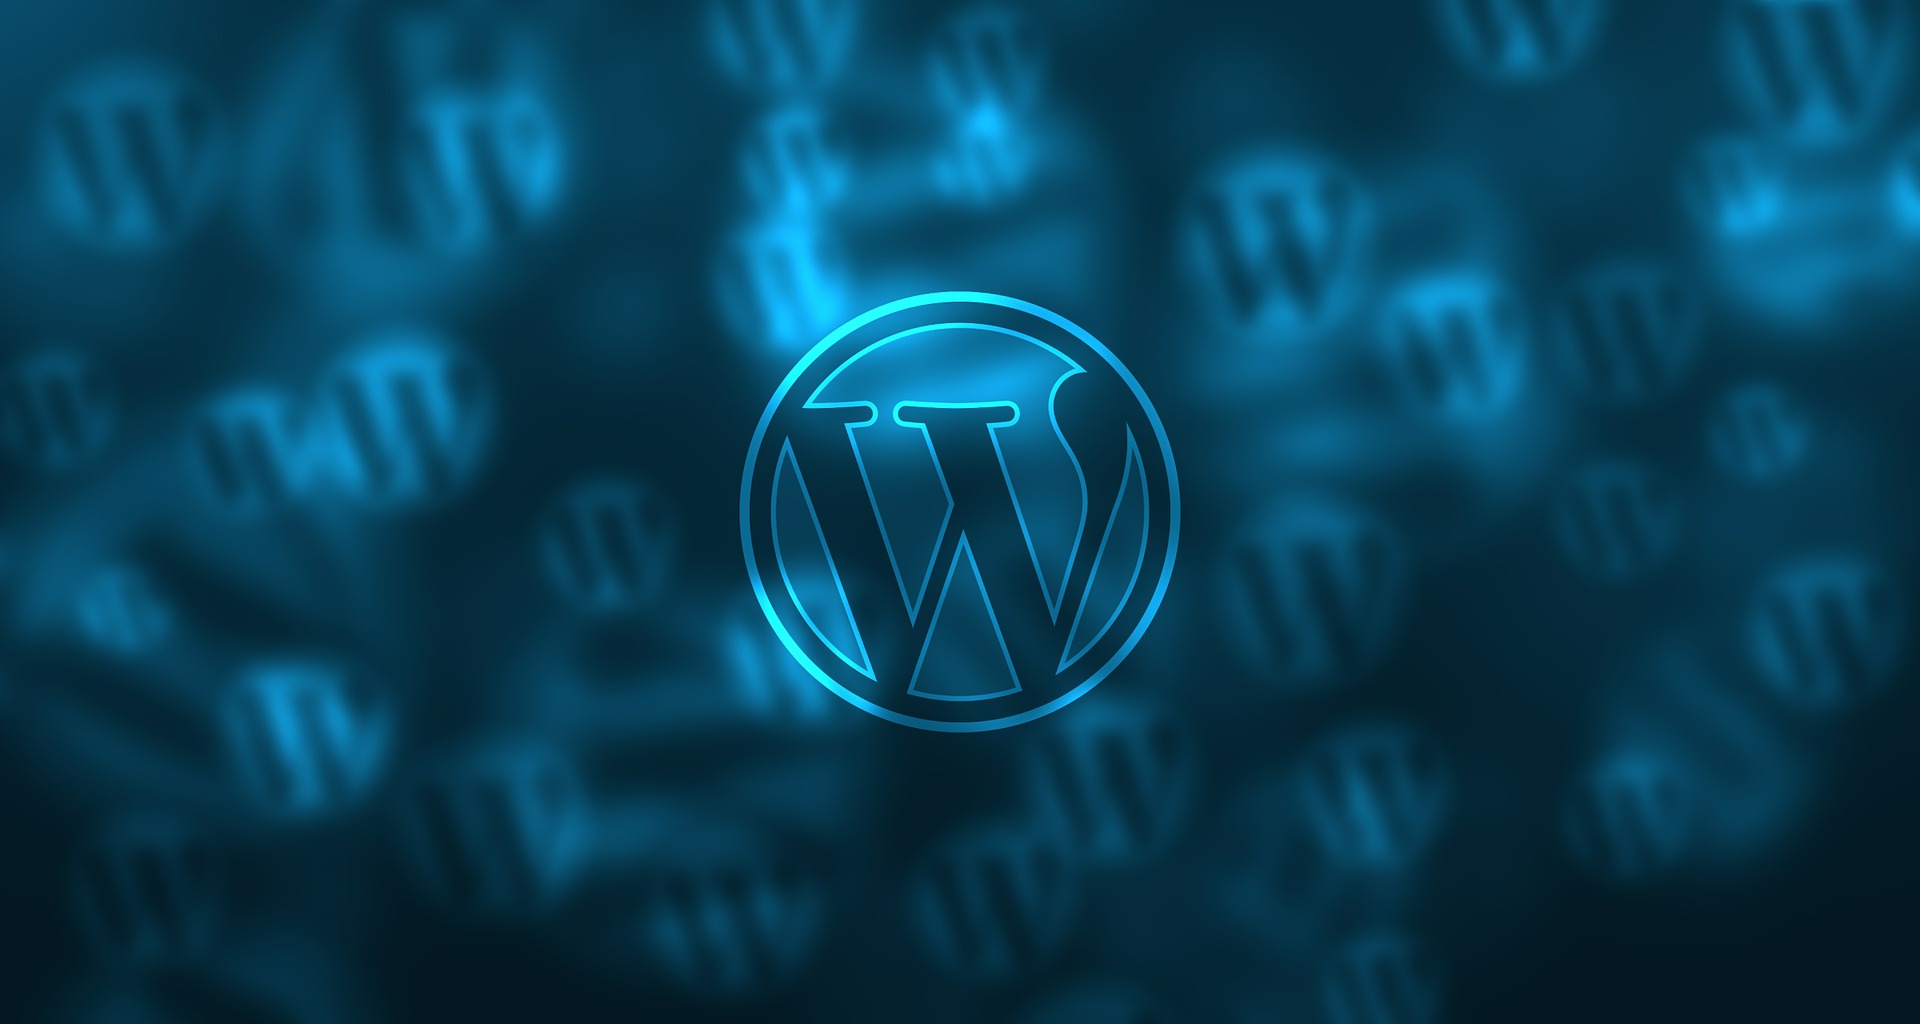 WordPress logga